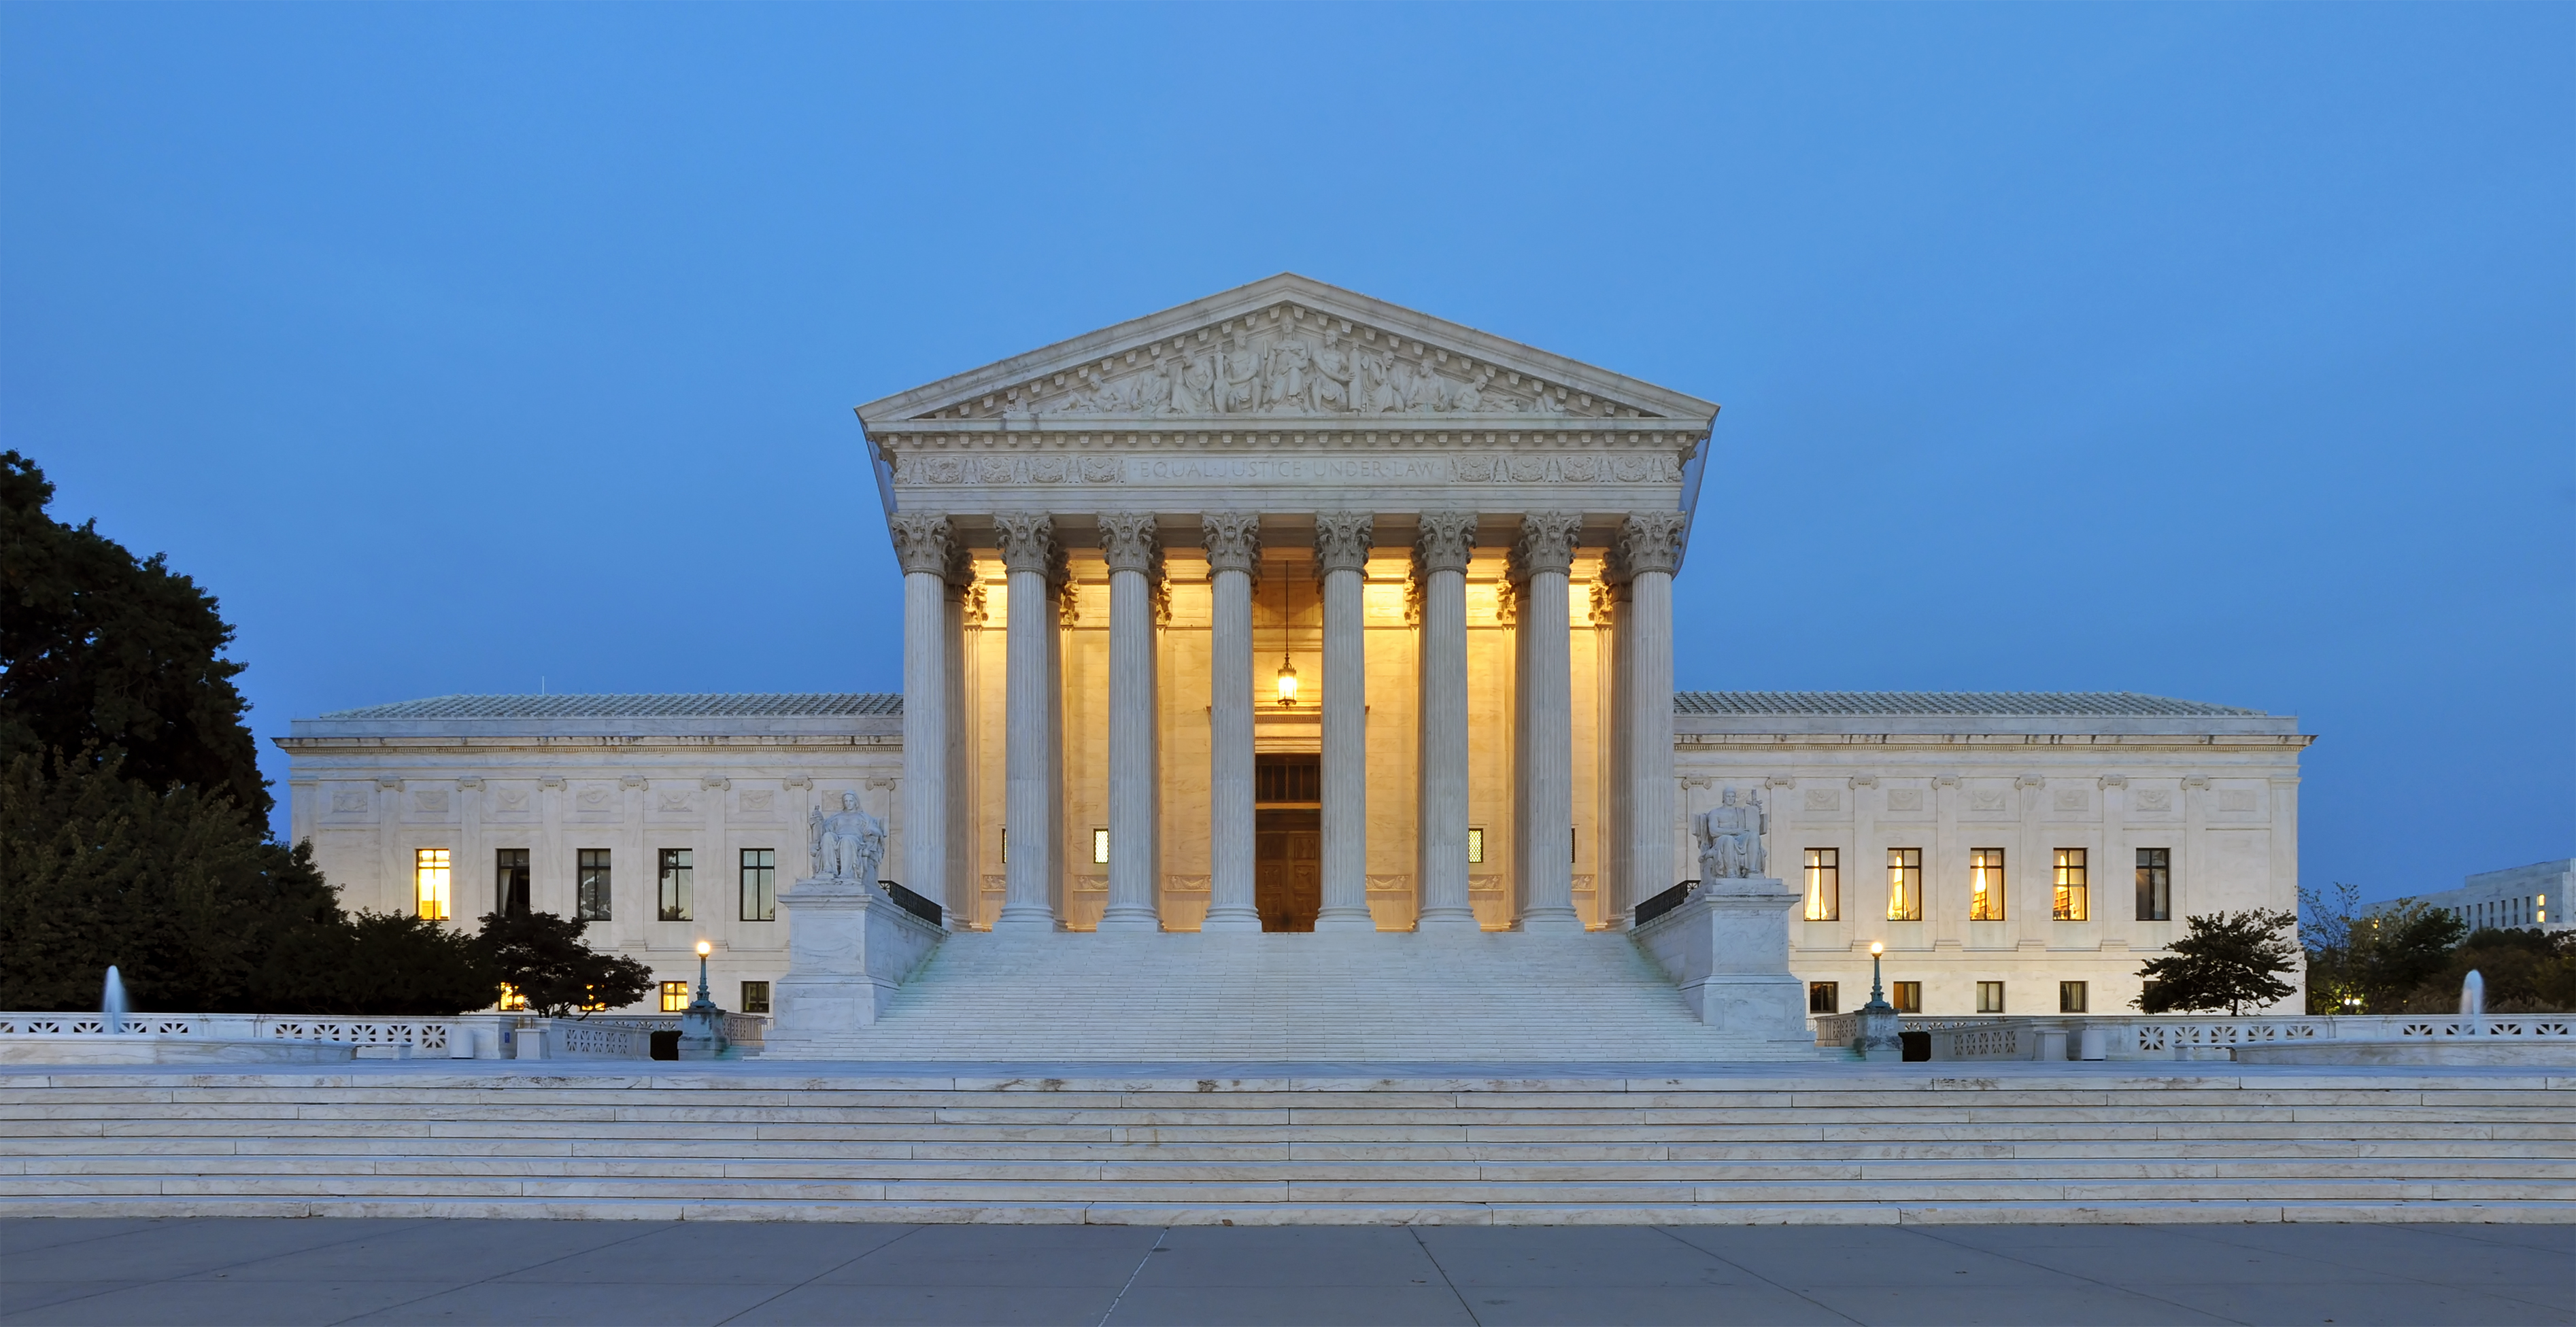 UPDATE 2-U.S. Supreme Court takes up presidential Electoral College dispute